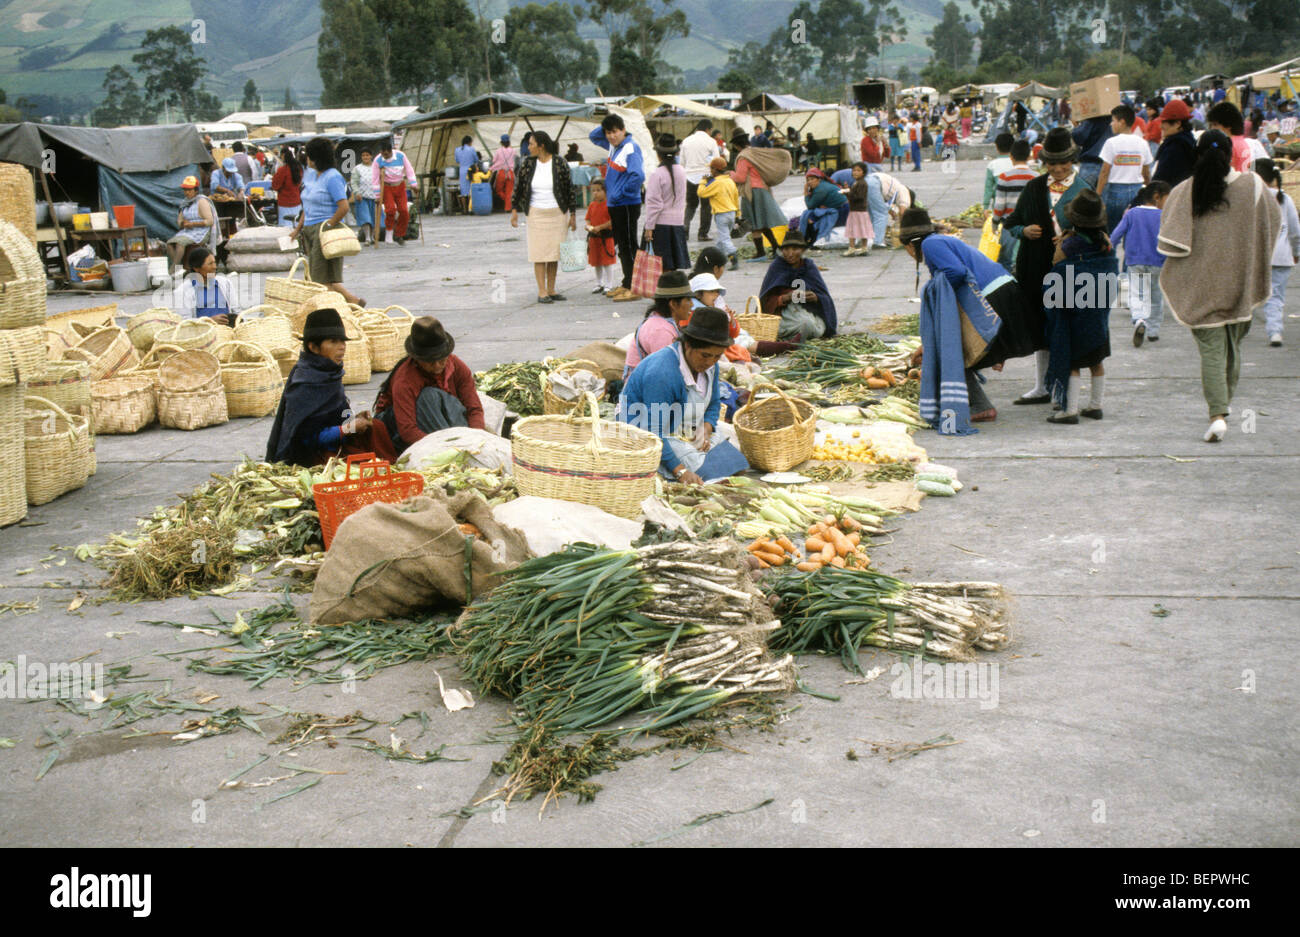 Vegetable sellers in Ecuadorian local market. Stock Photo